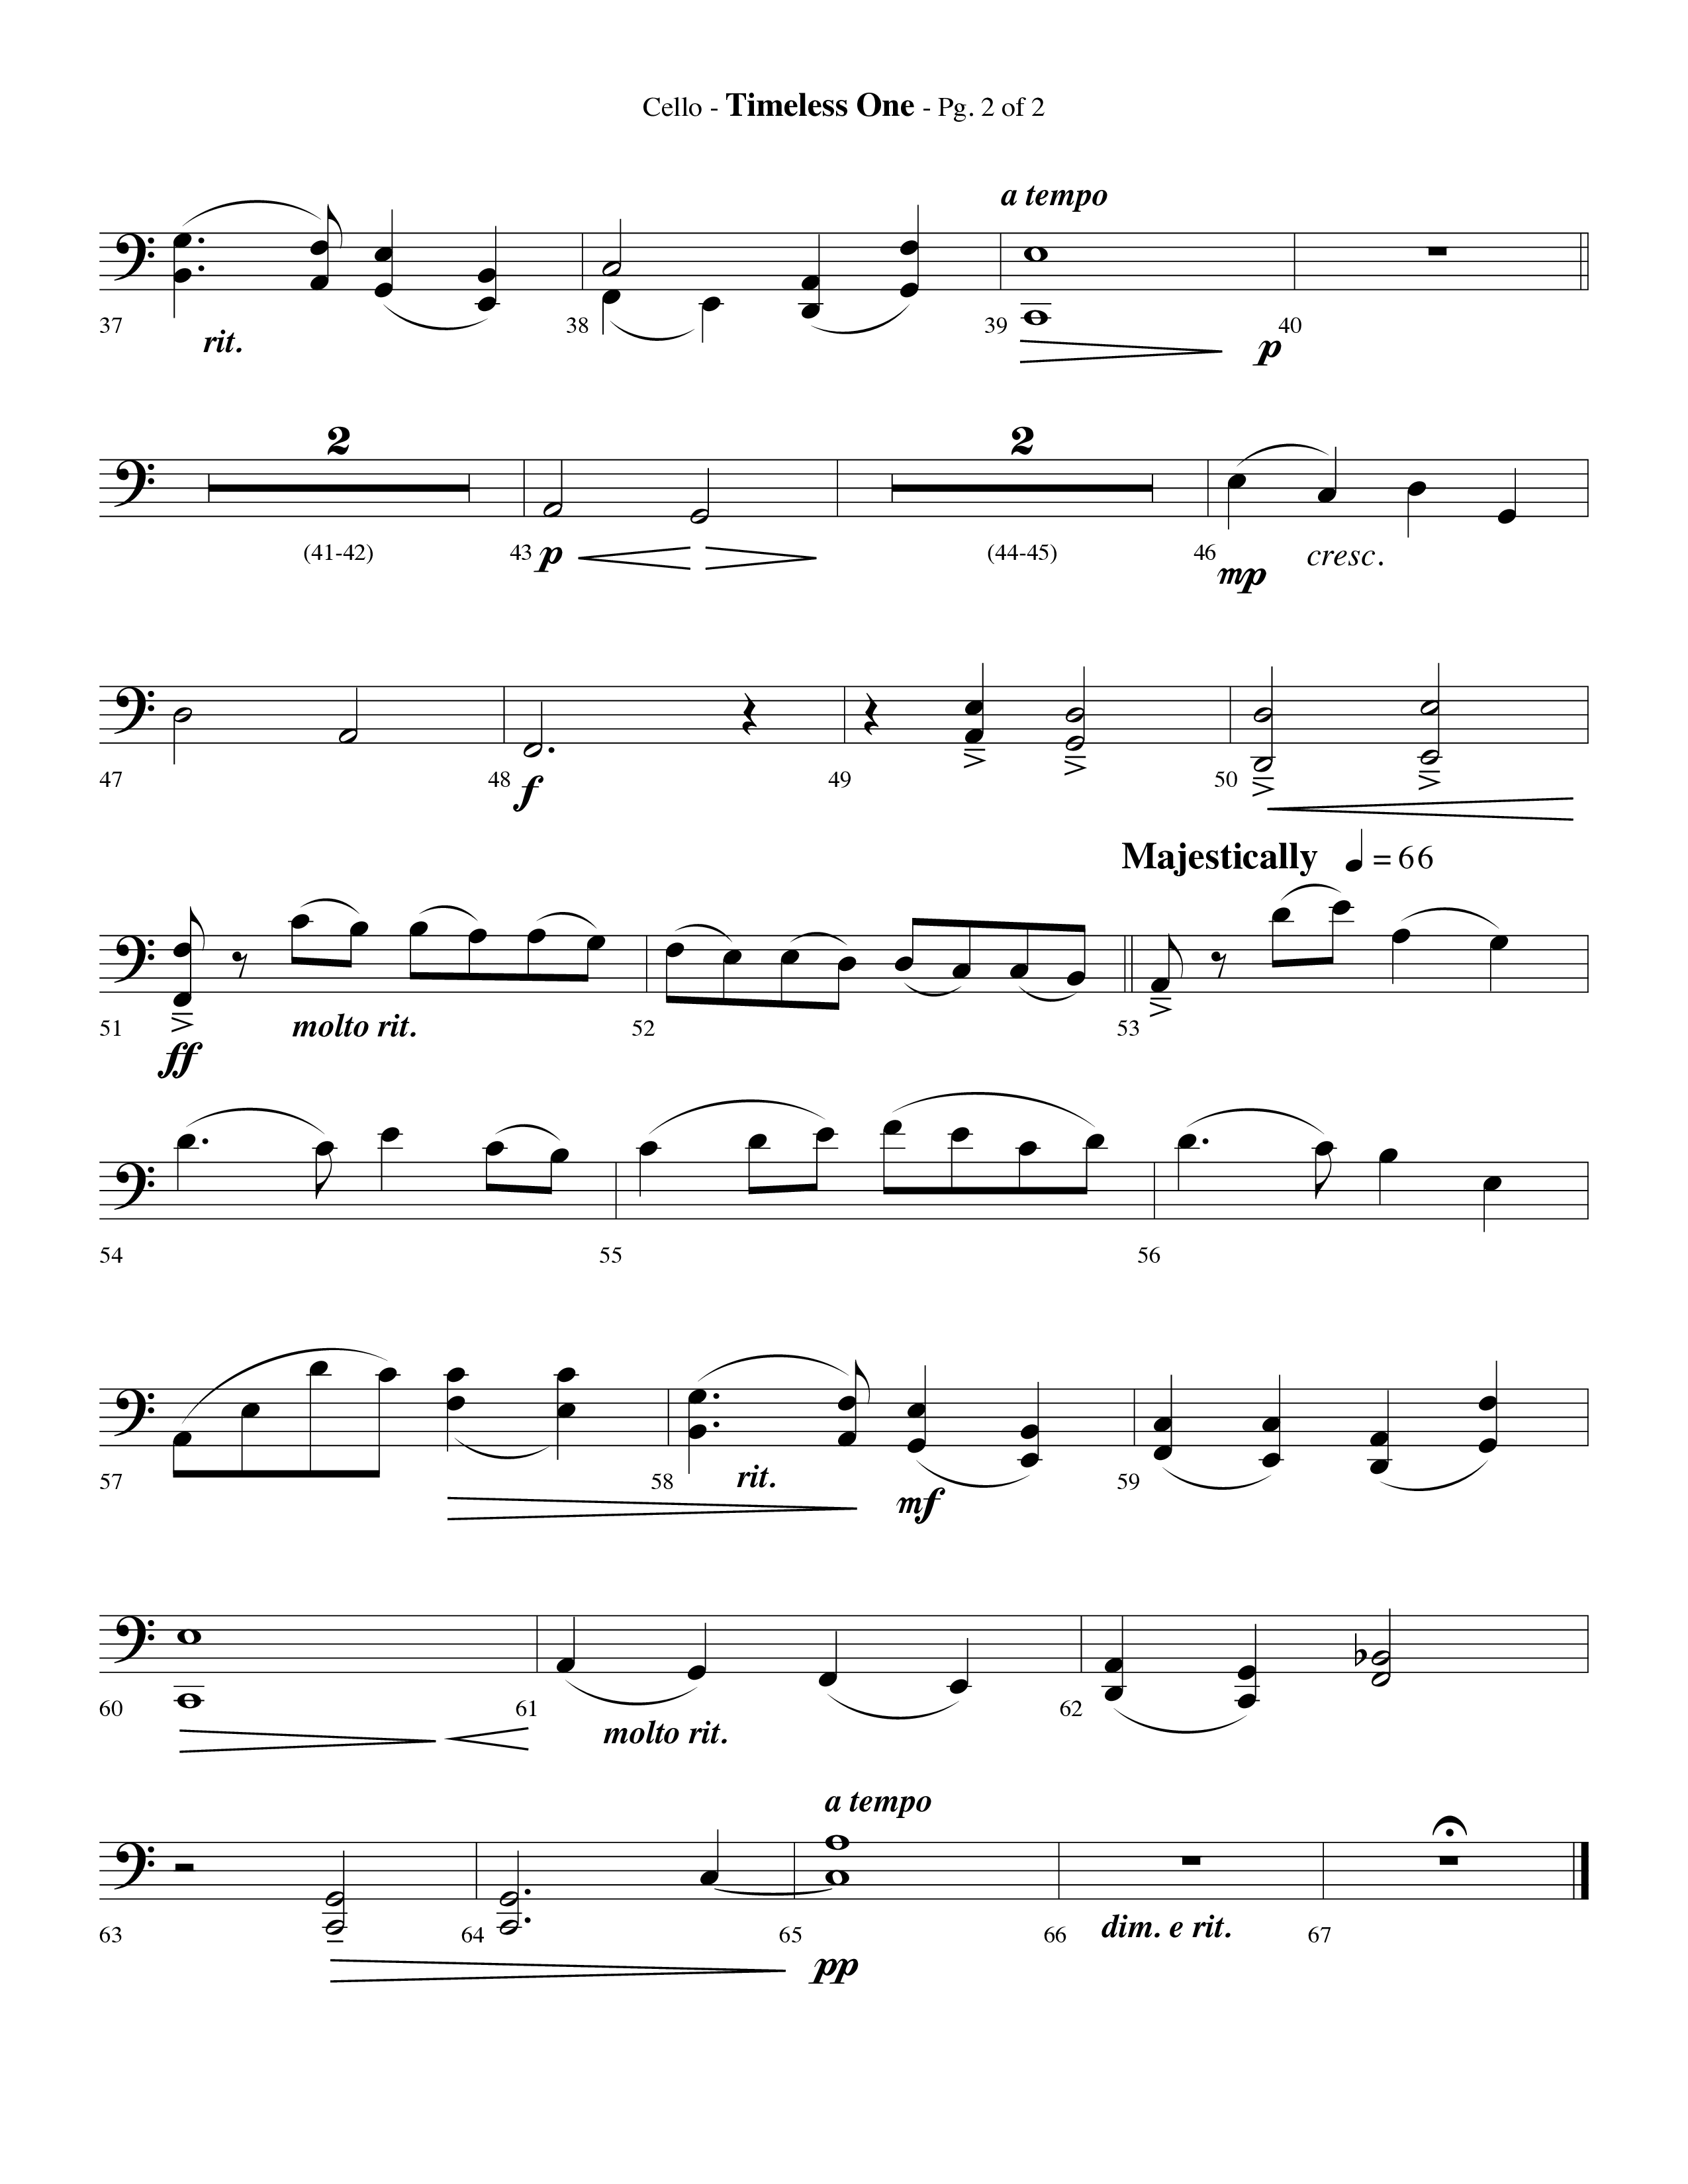 Timeless One (Choral Anthem SATB) Cello (Lifeway Choral / Arr. Phillip Keveren)